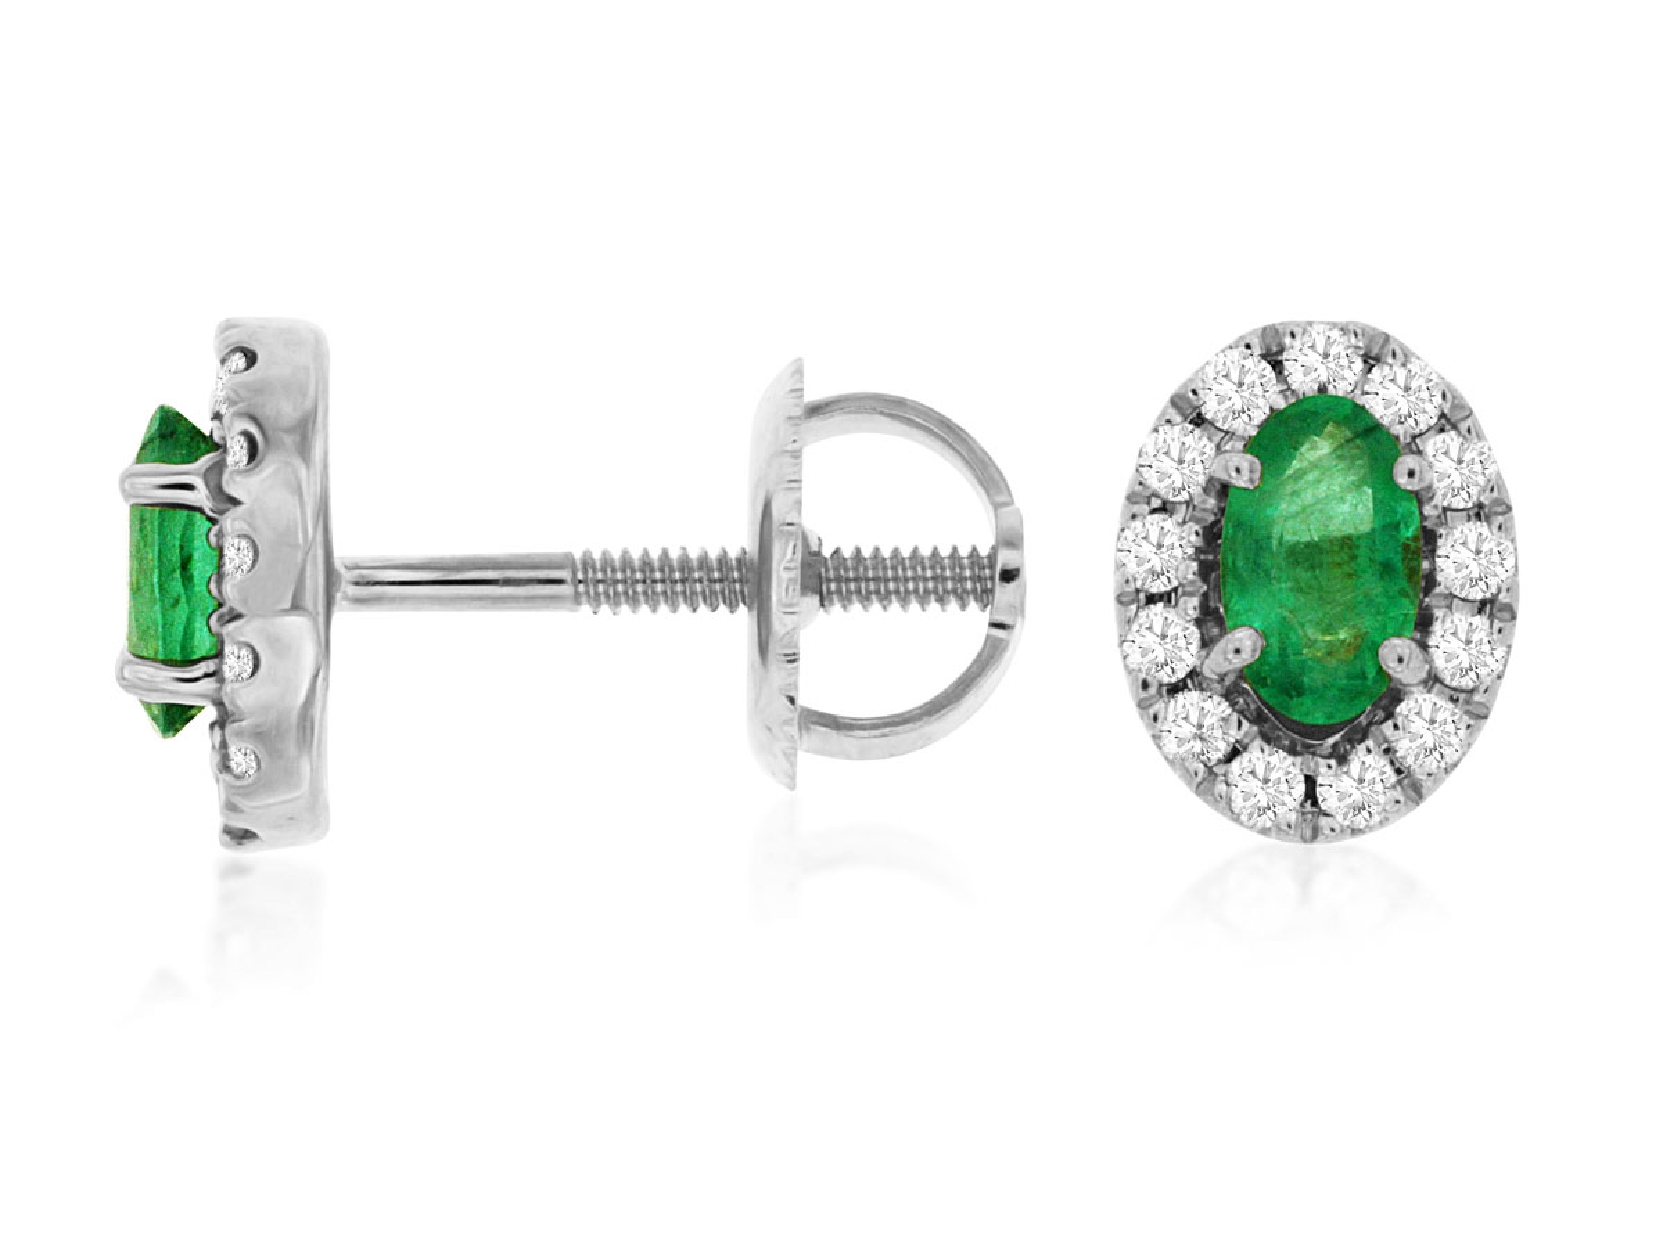 14K White Gold Round Emerald Stud Earrings with Diamond Halo 

0.44cttw Emeralds
0.18cttw Diamonds